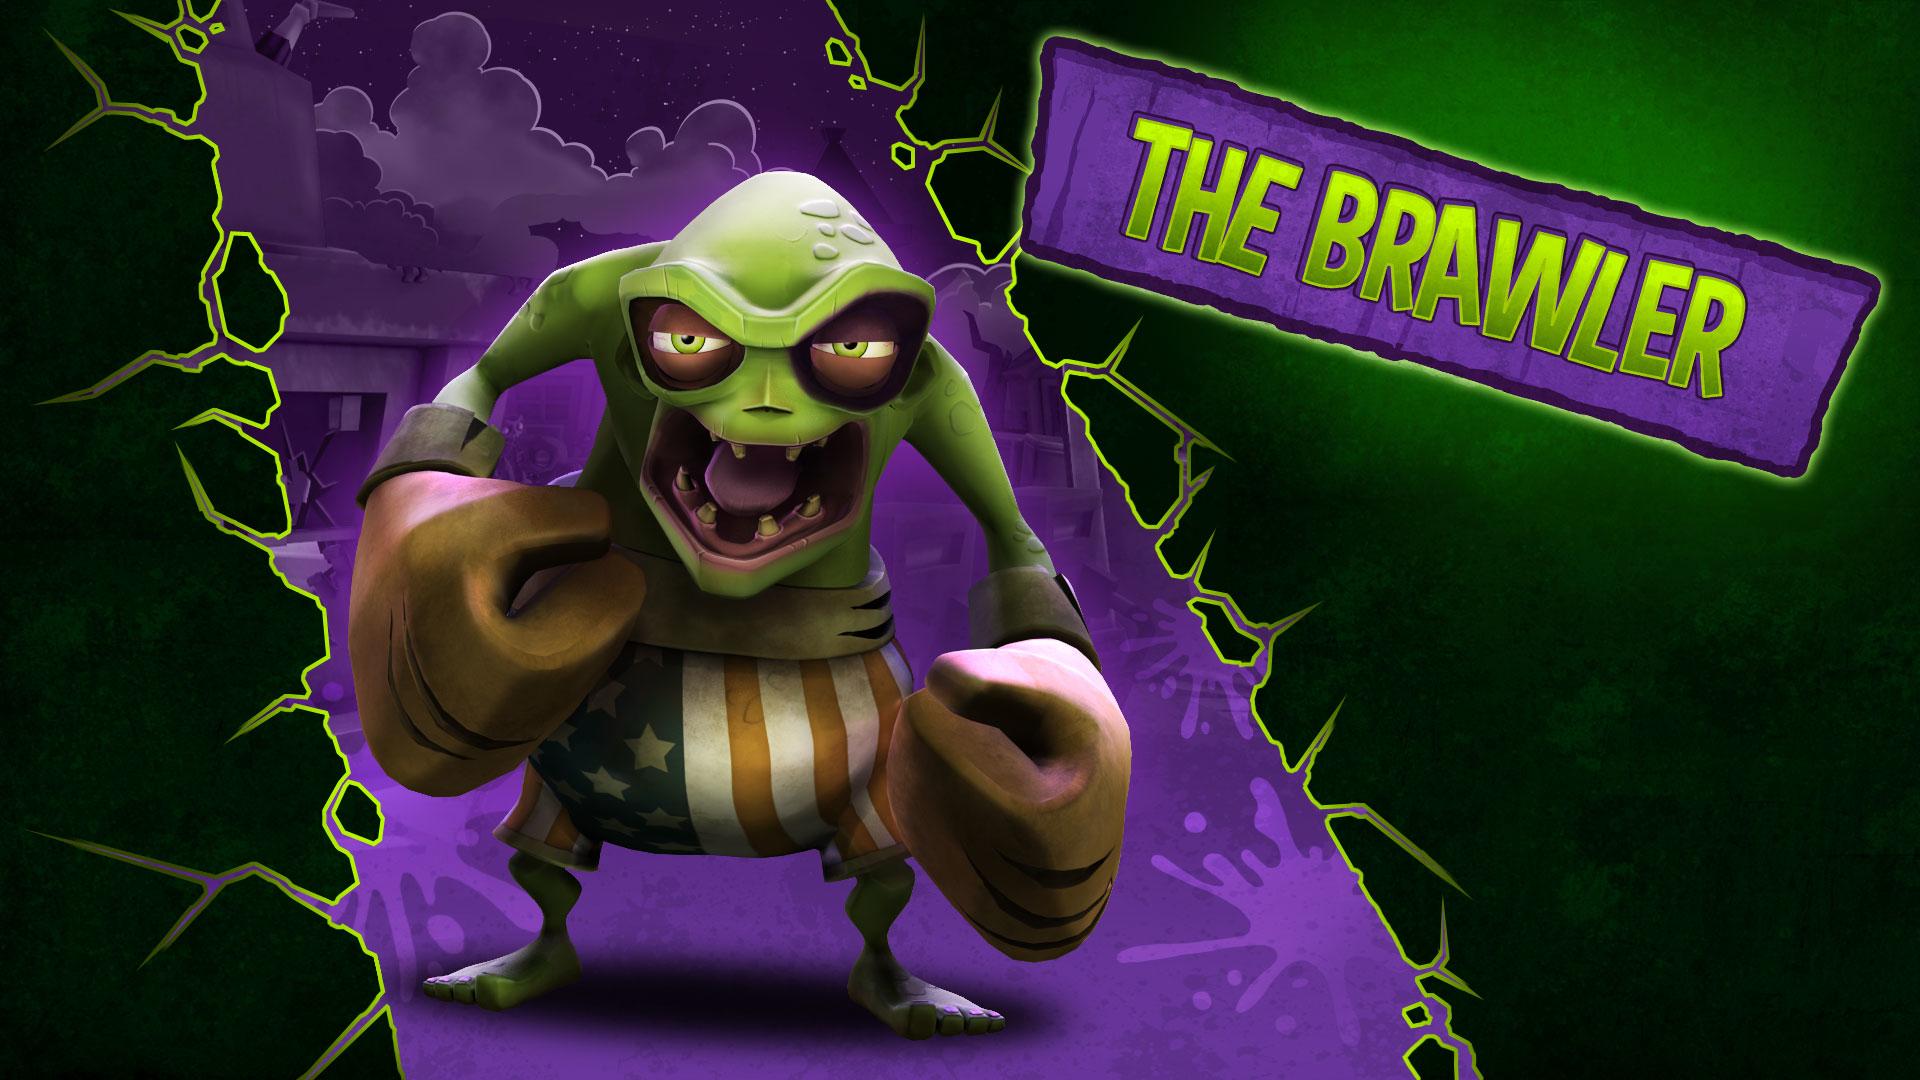 Zombie Tycoon 2 Brainhov s Revenge at 1024 x 1024 iPad size wallpapers HD quality